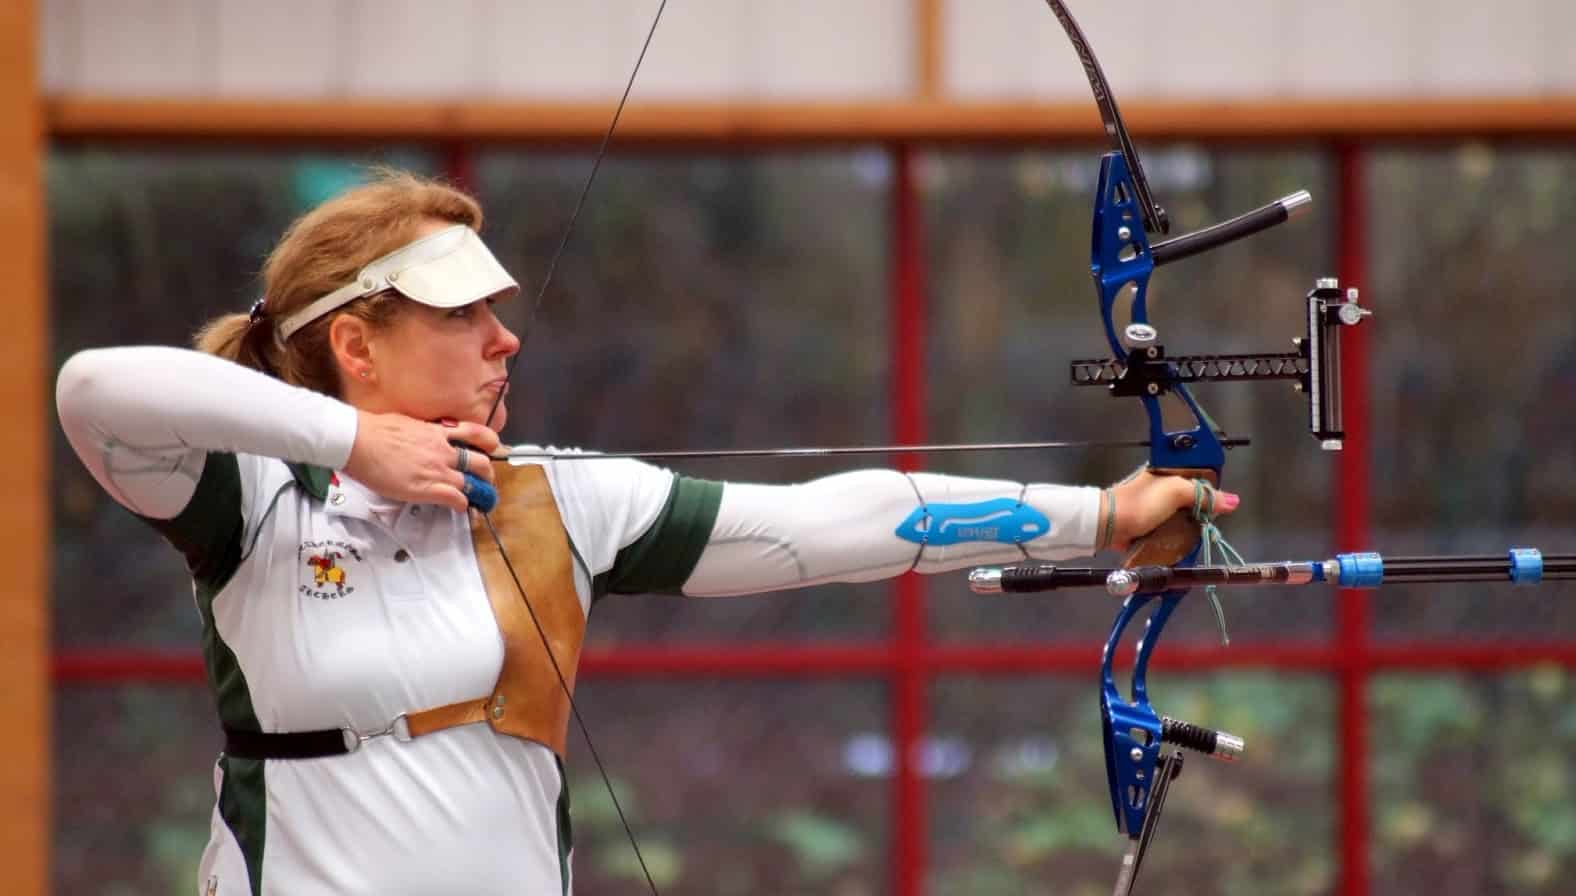 Vlada Priestman archery coach shooting